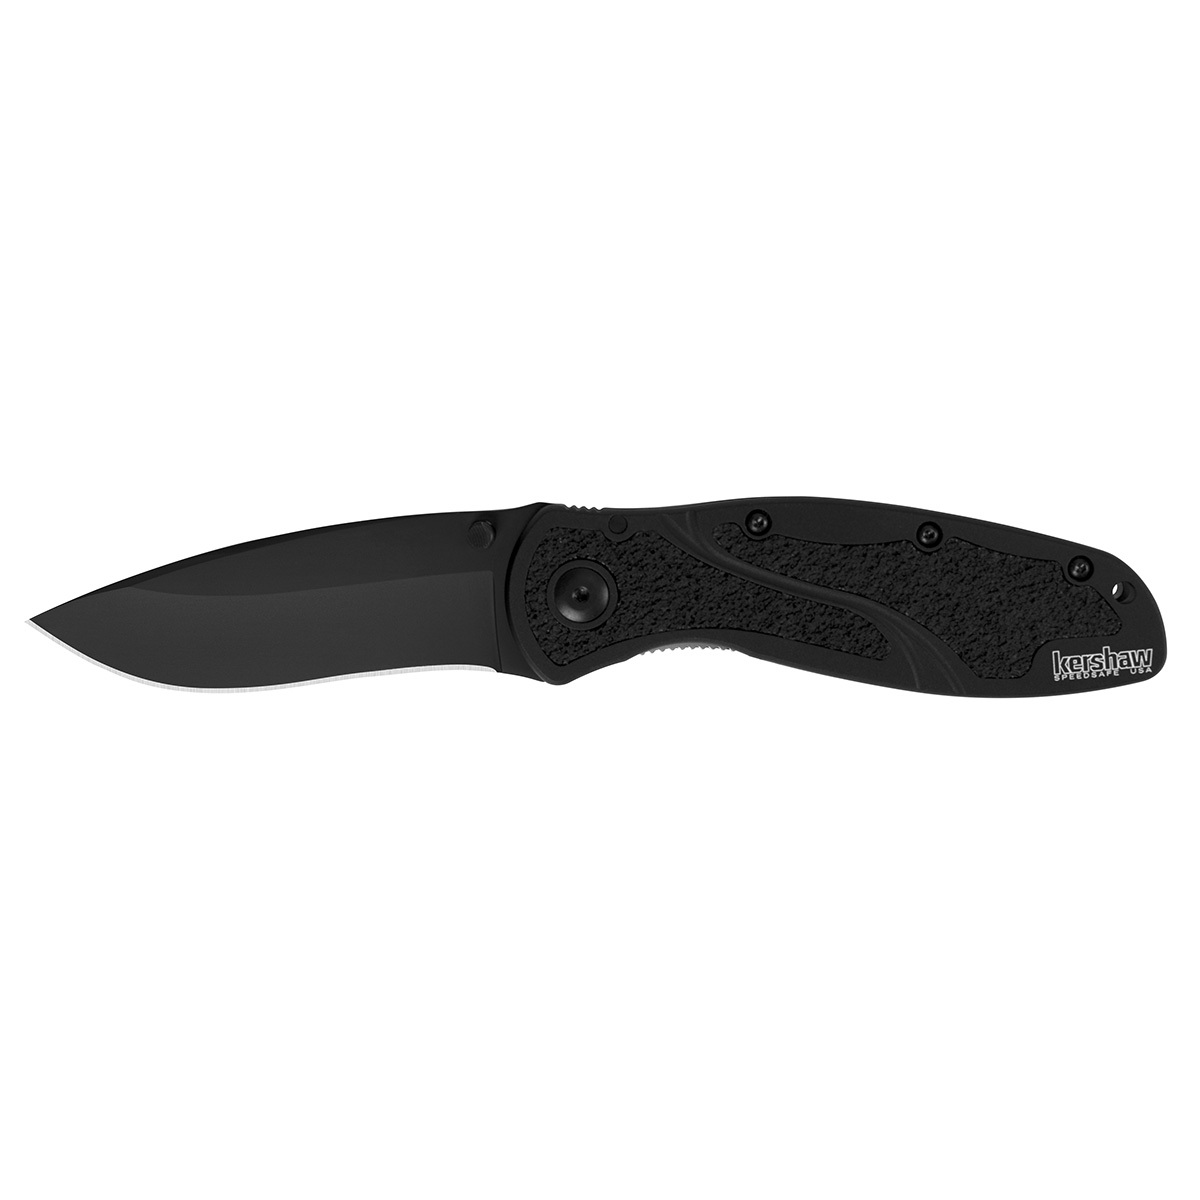 Складной нож Kershaw 1670BLK Blur Black, сталь Sandvik 14C28N, рукоять анодированный алюминий складной нож stinger с клипом 80 мм рукоять сталь пластик коробка картон